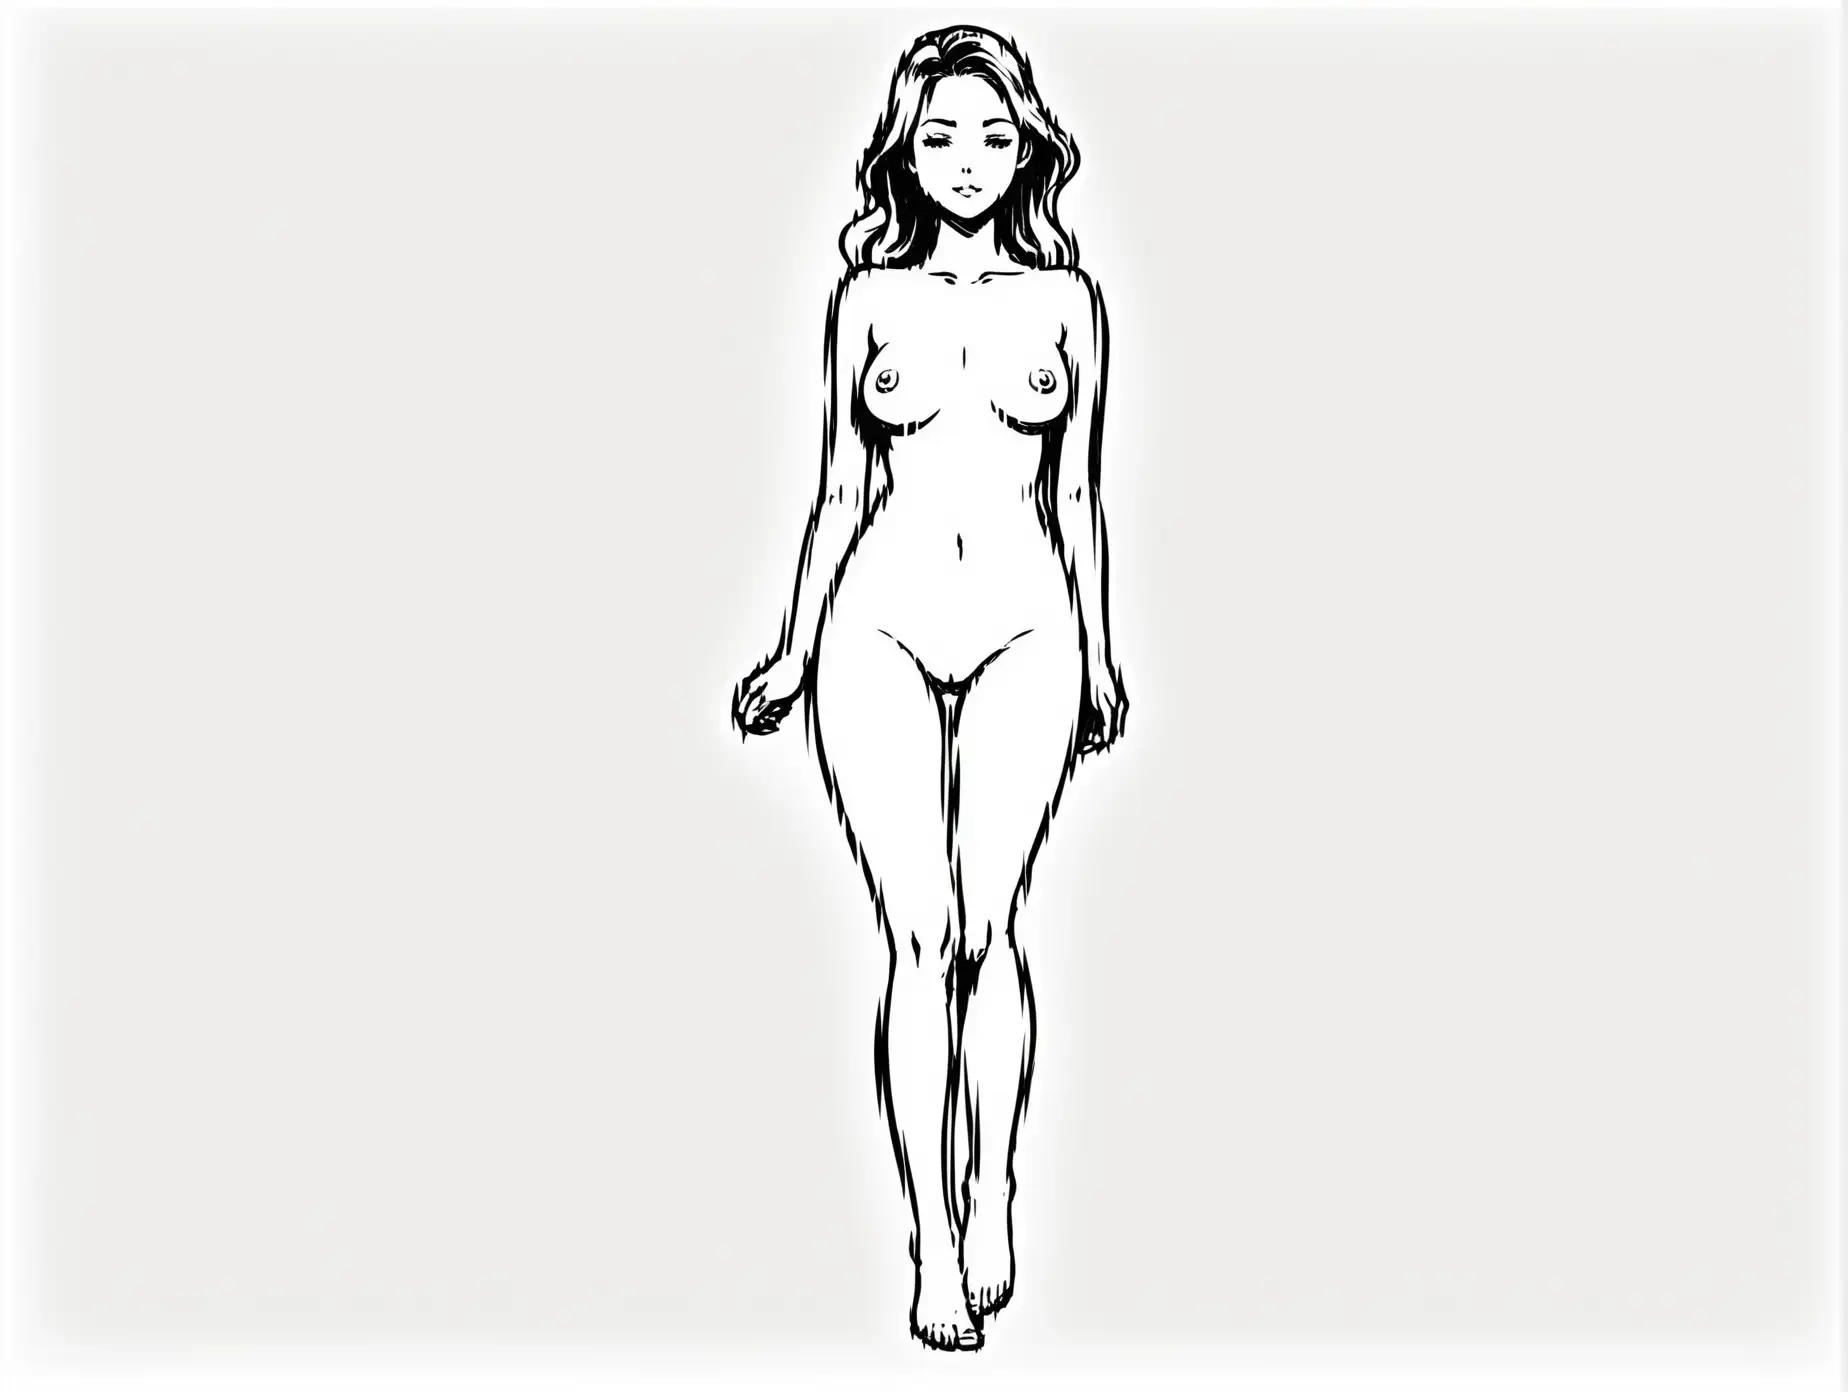 Minimalist Line Drawing of Nude Female Figure on White Background